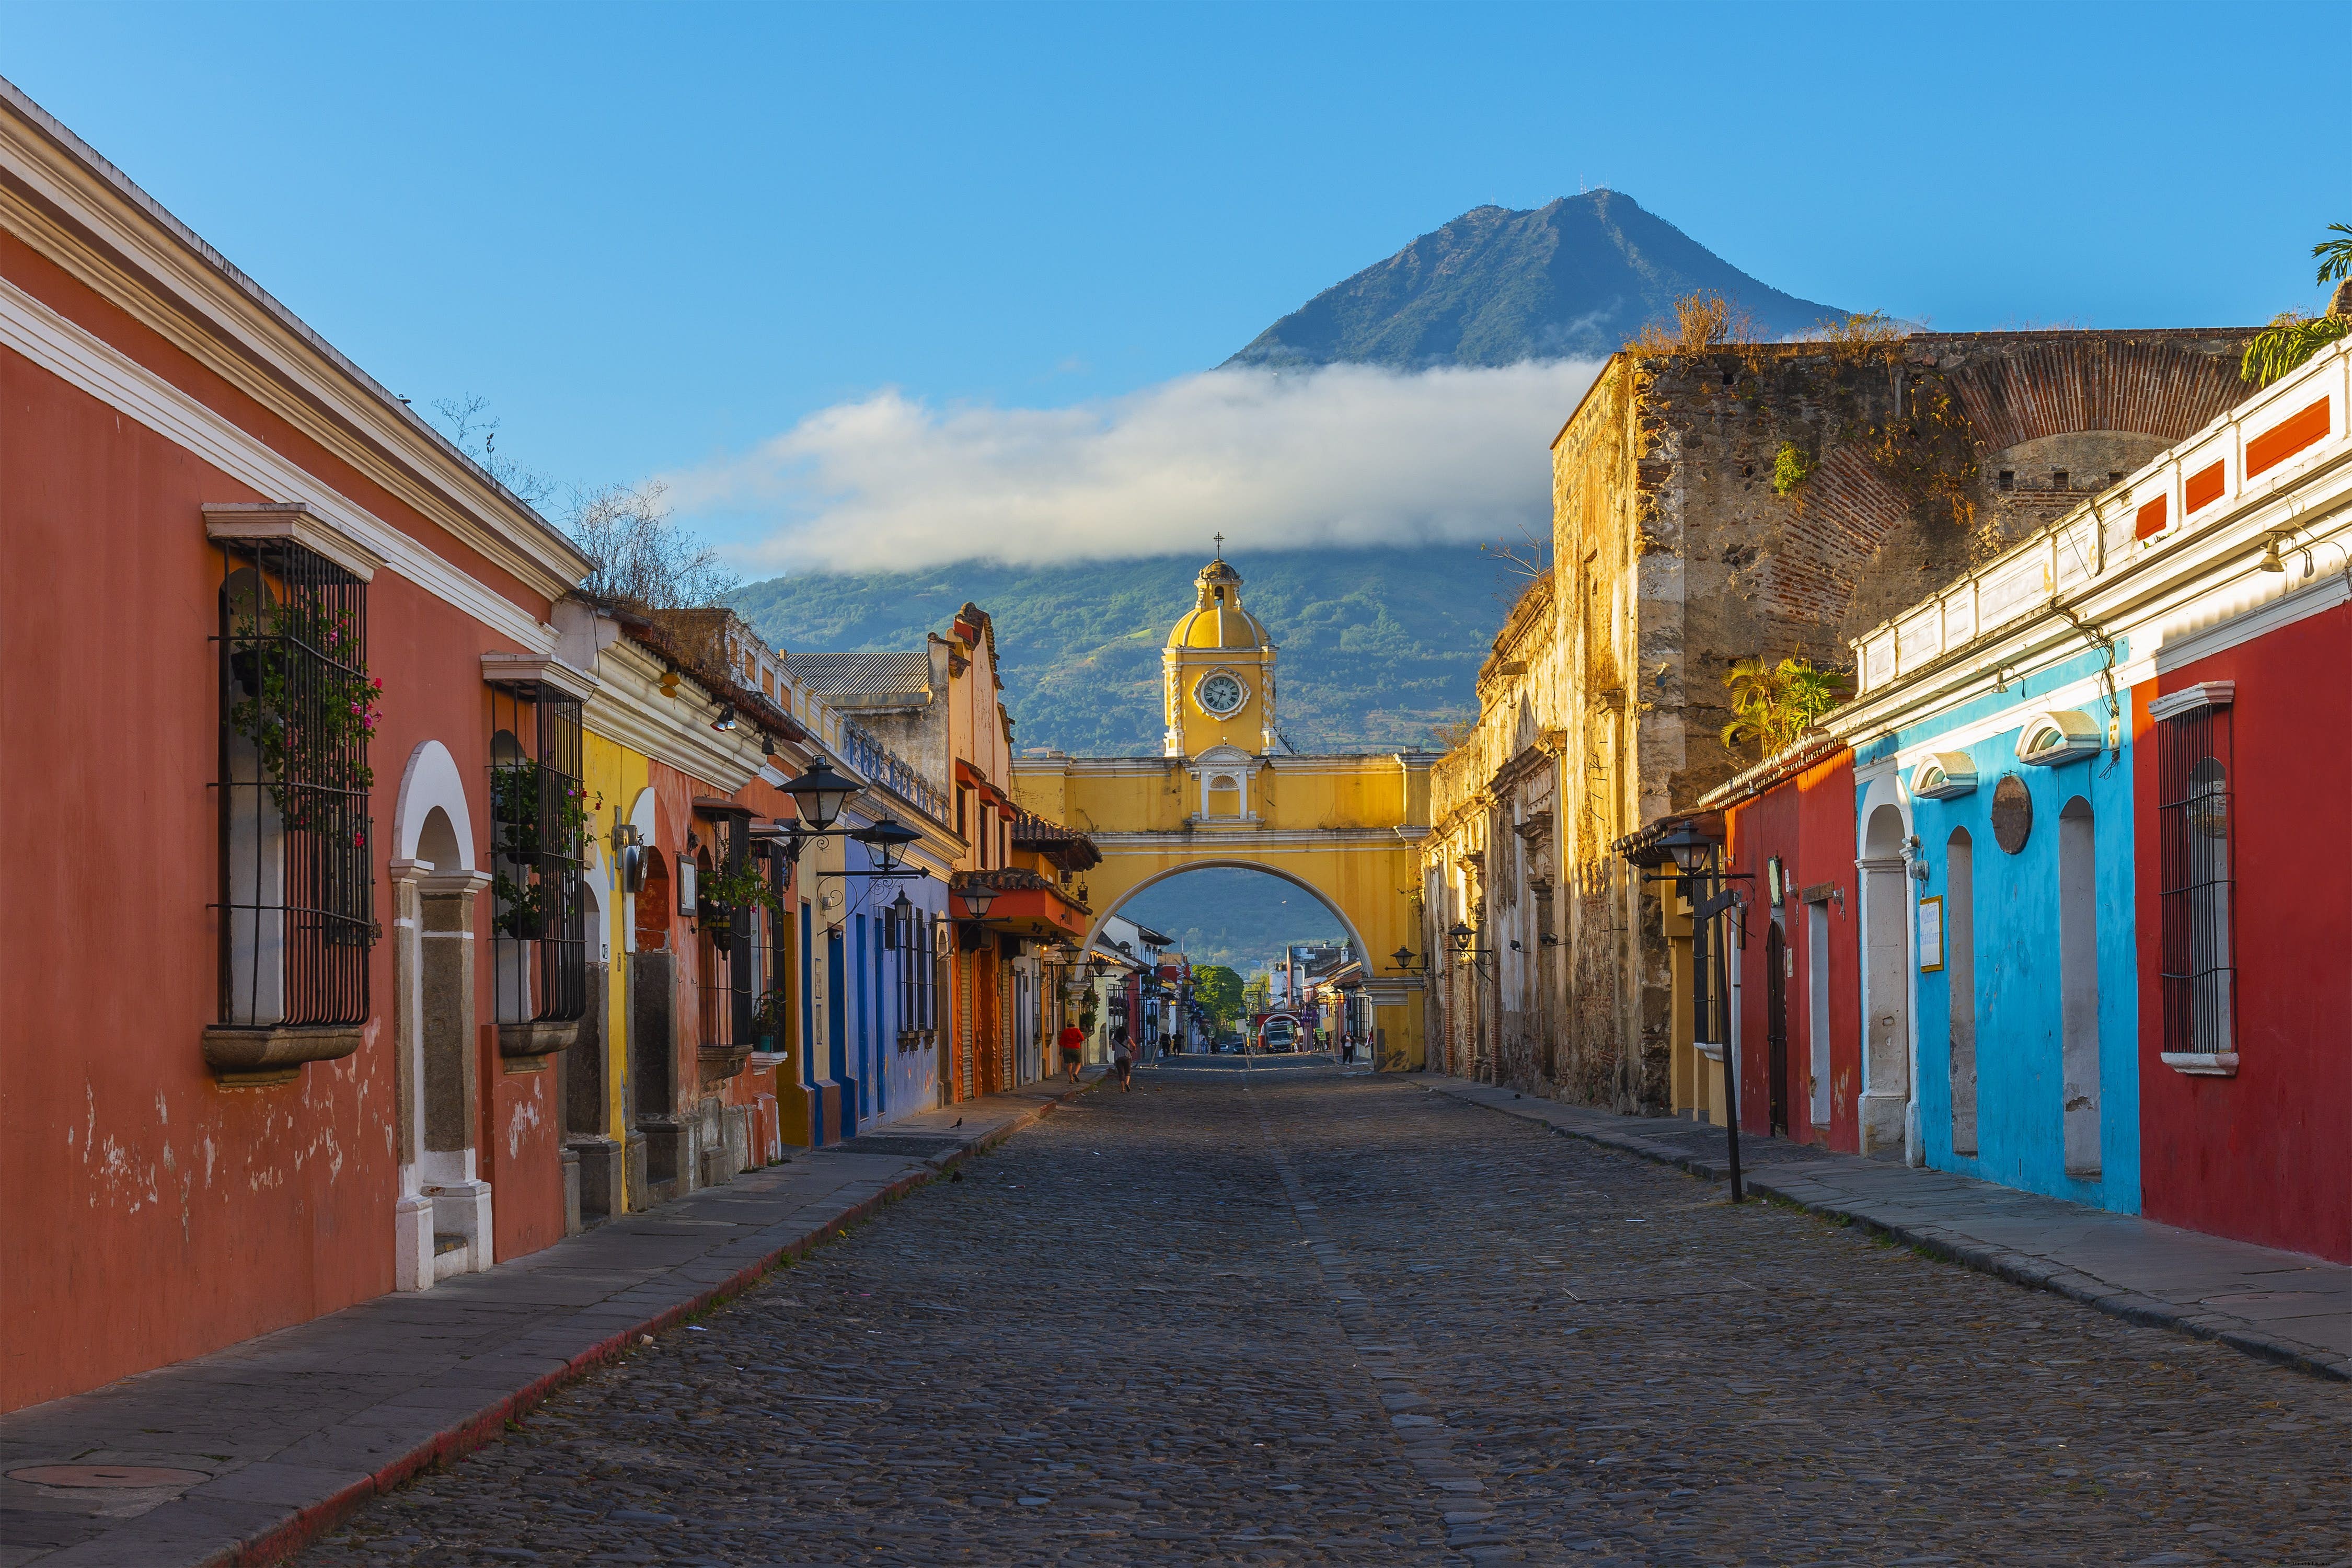 Jalan Raya Pan-Amerika:perjalanan darat terbaik 